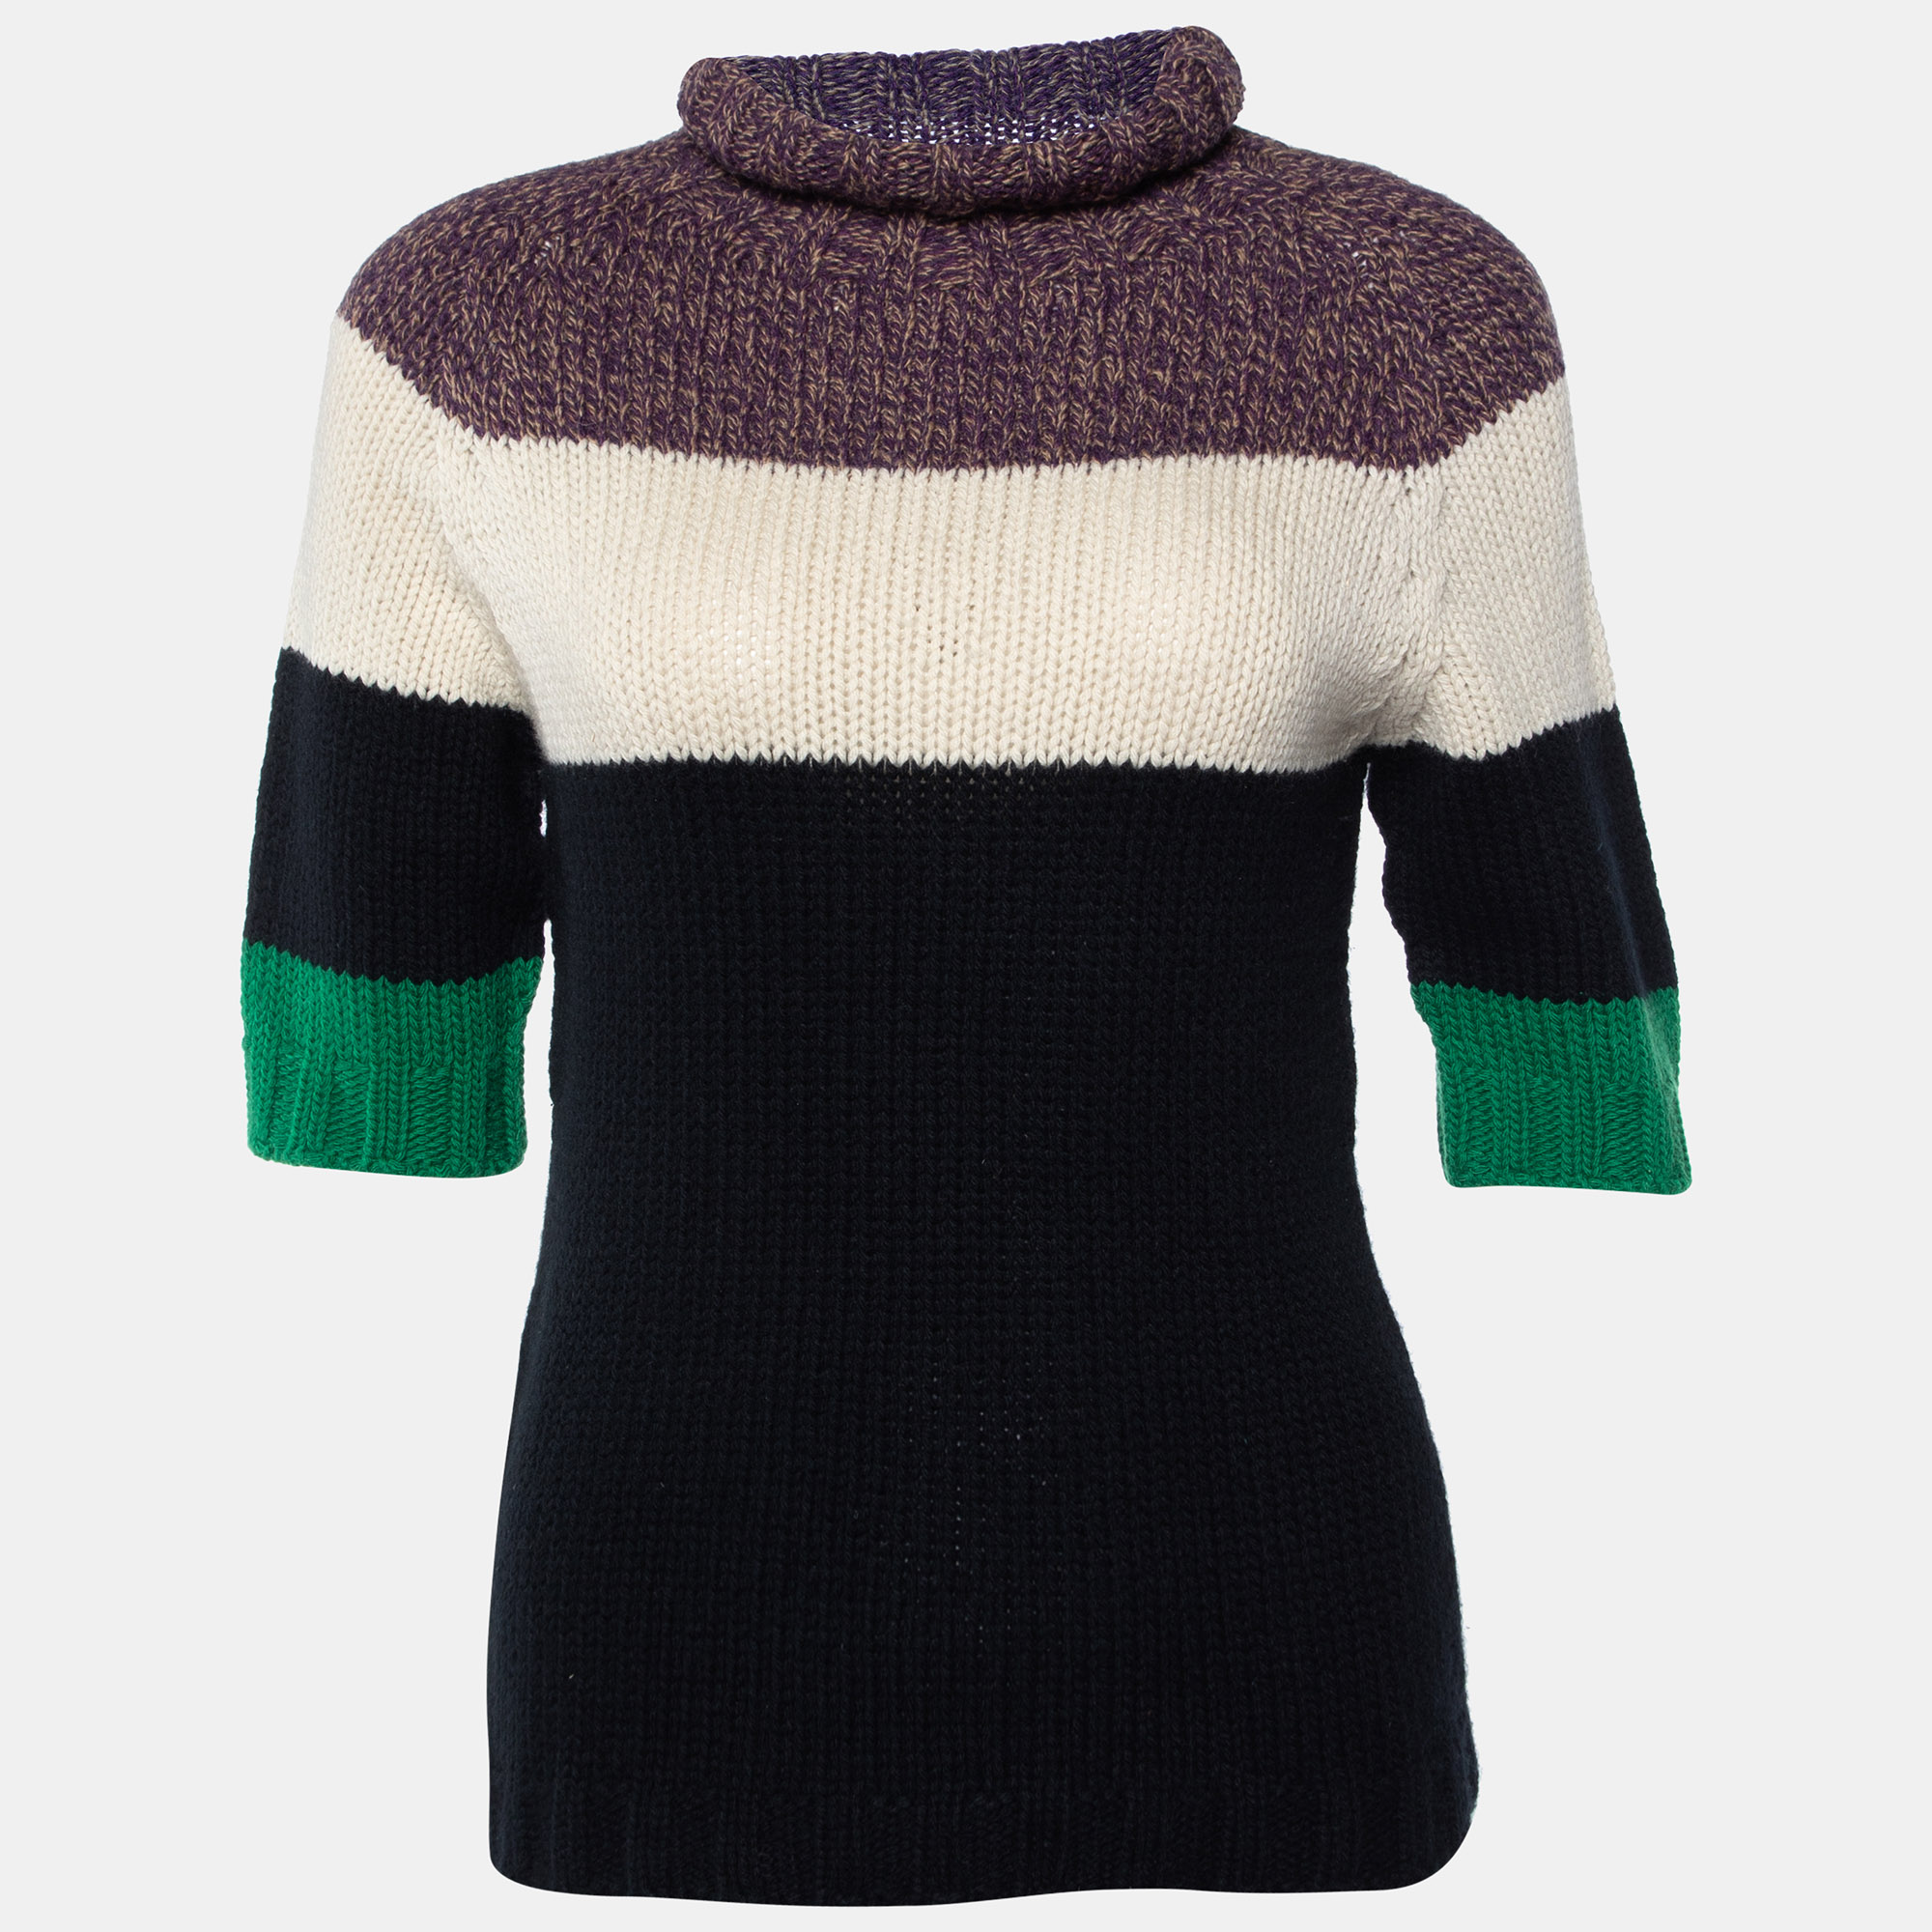 Marni Black Colorblock Wool & Cashmere Knit Sweater S